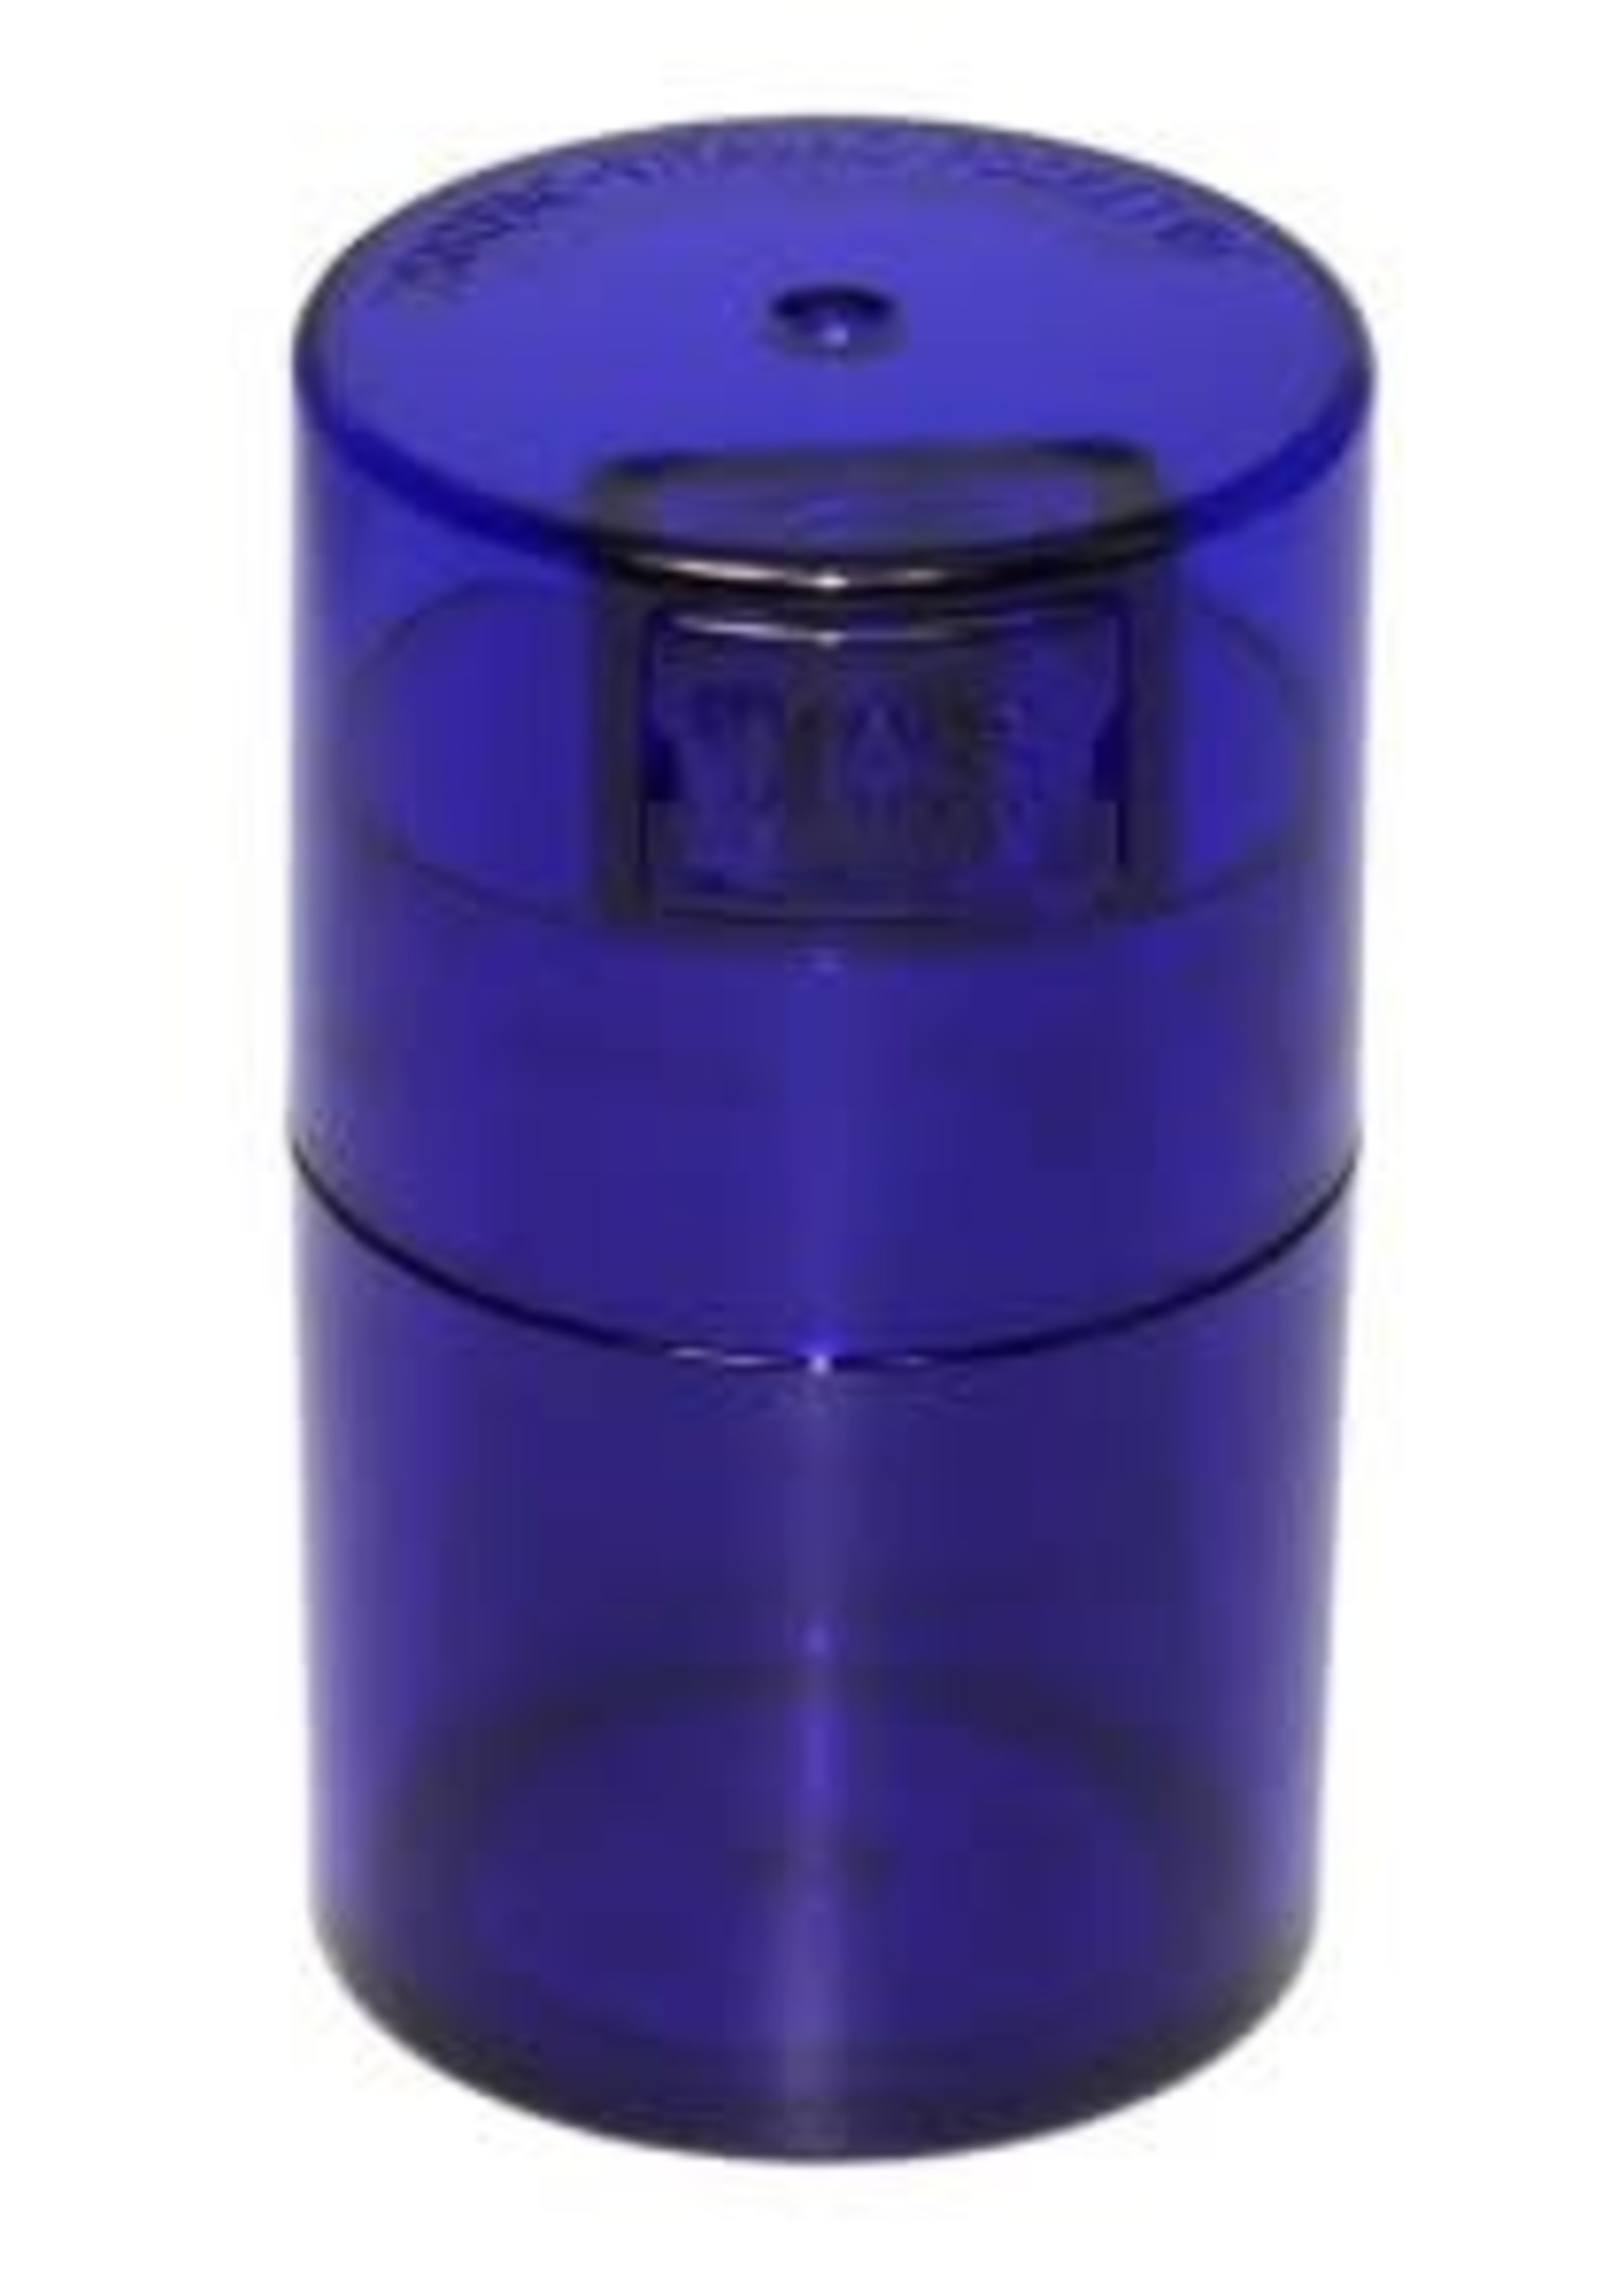 Vitavac 0.06 liter Blue Tint Cap/Blue Tint Body